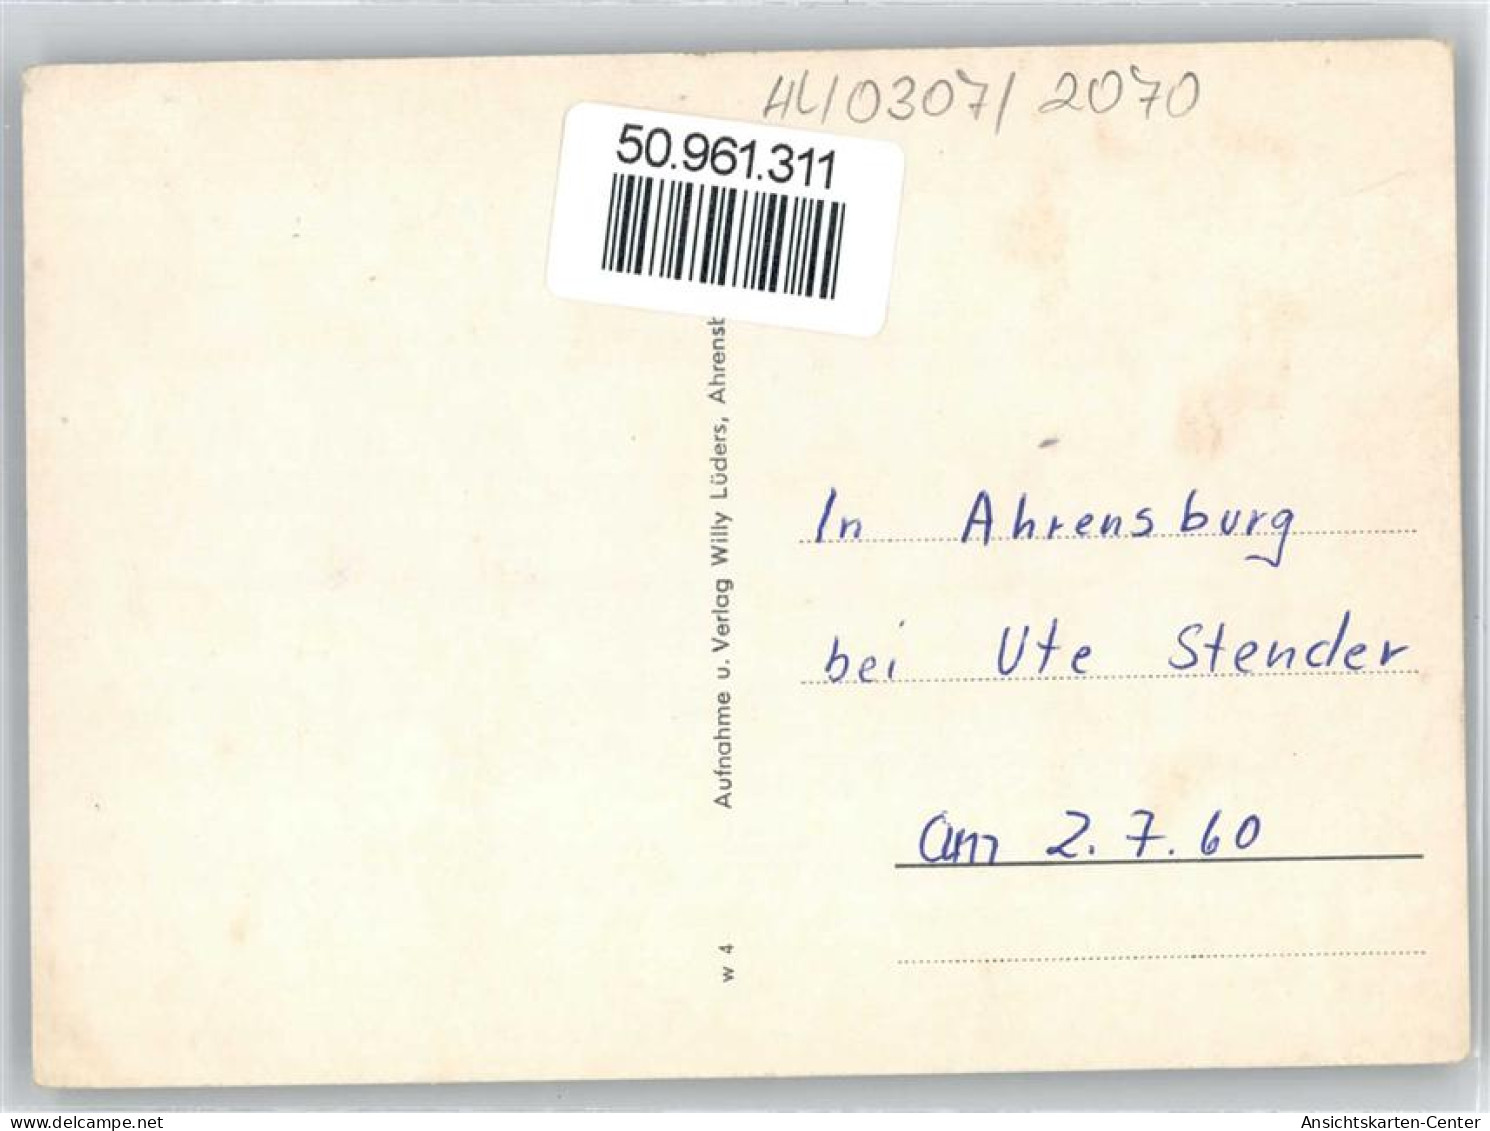 50961311 - Ahrensburg - Ahrensburg